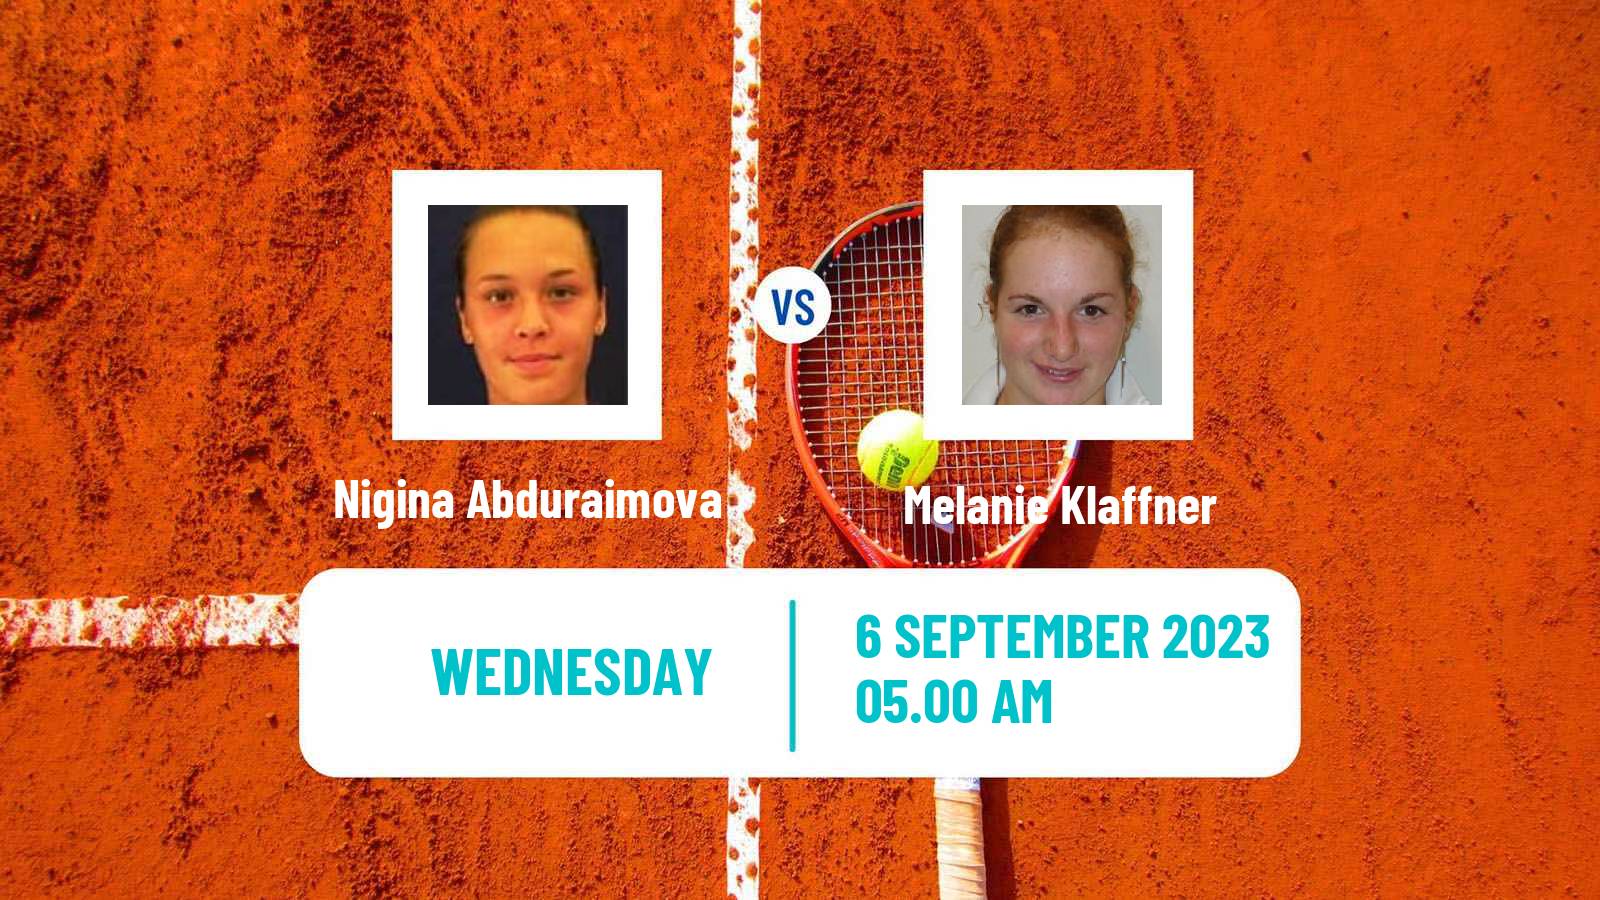 Tennis ITF W60 Vienna Women Nigina Abduraimova - Melanie Klaffner